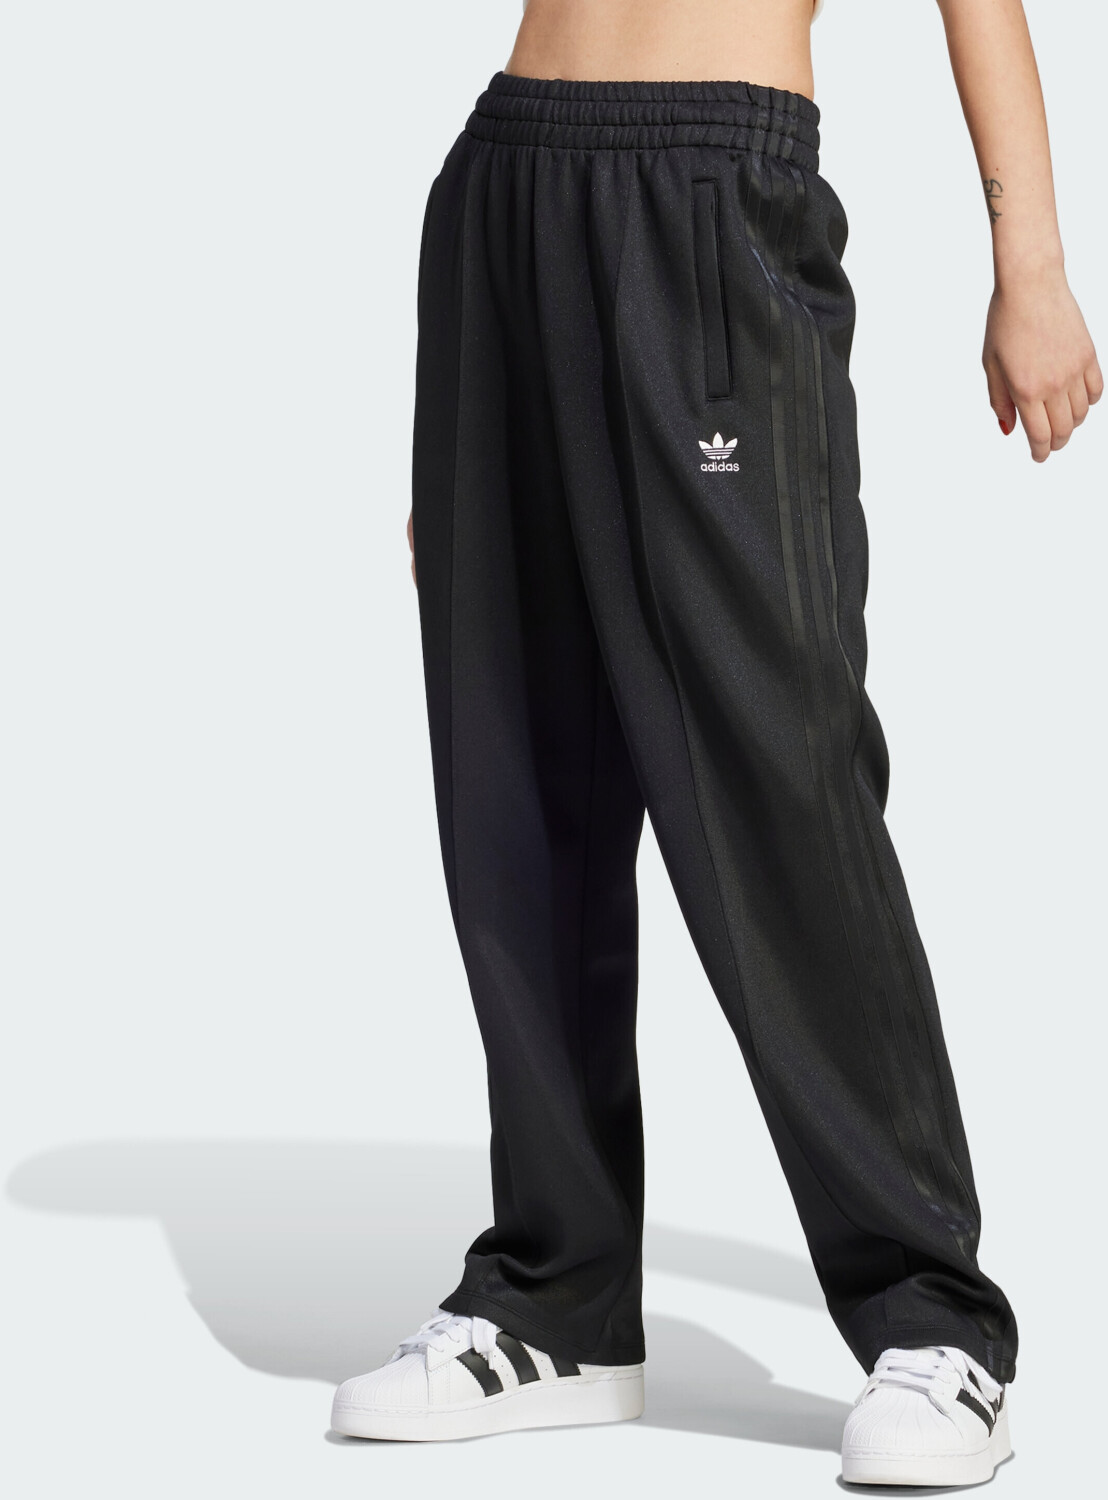 Adidas Woman | black bei adicolor (IK6505) € Oversized 44,99 SST Preisvergleich ab Classics Pants Training